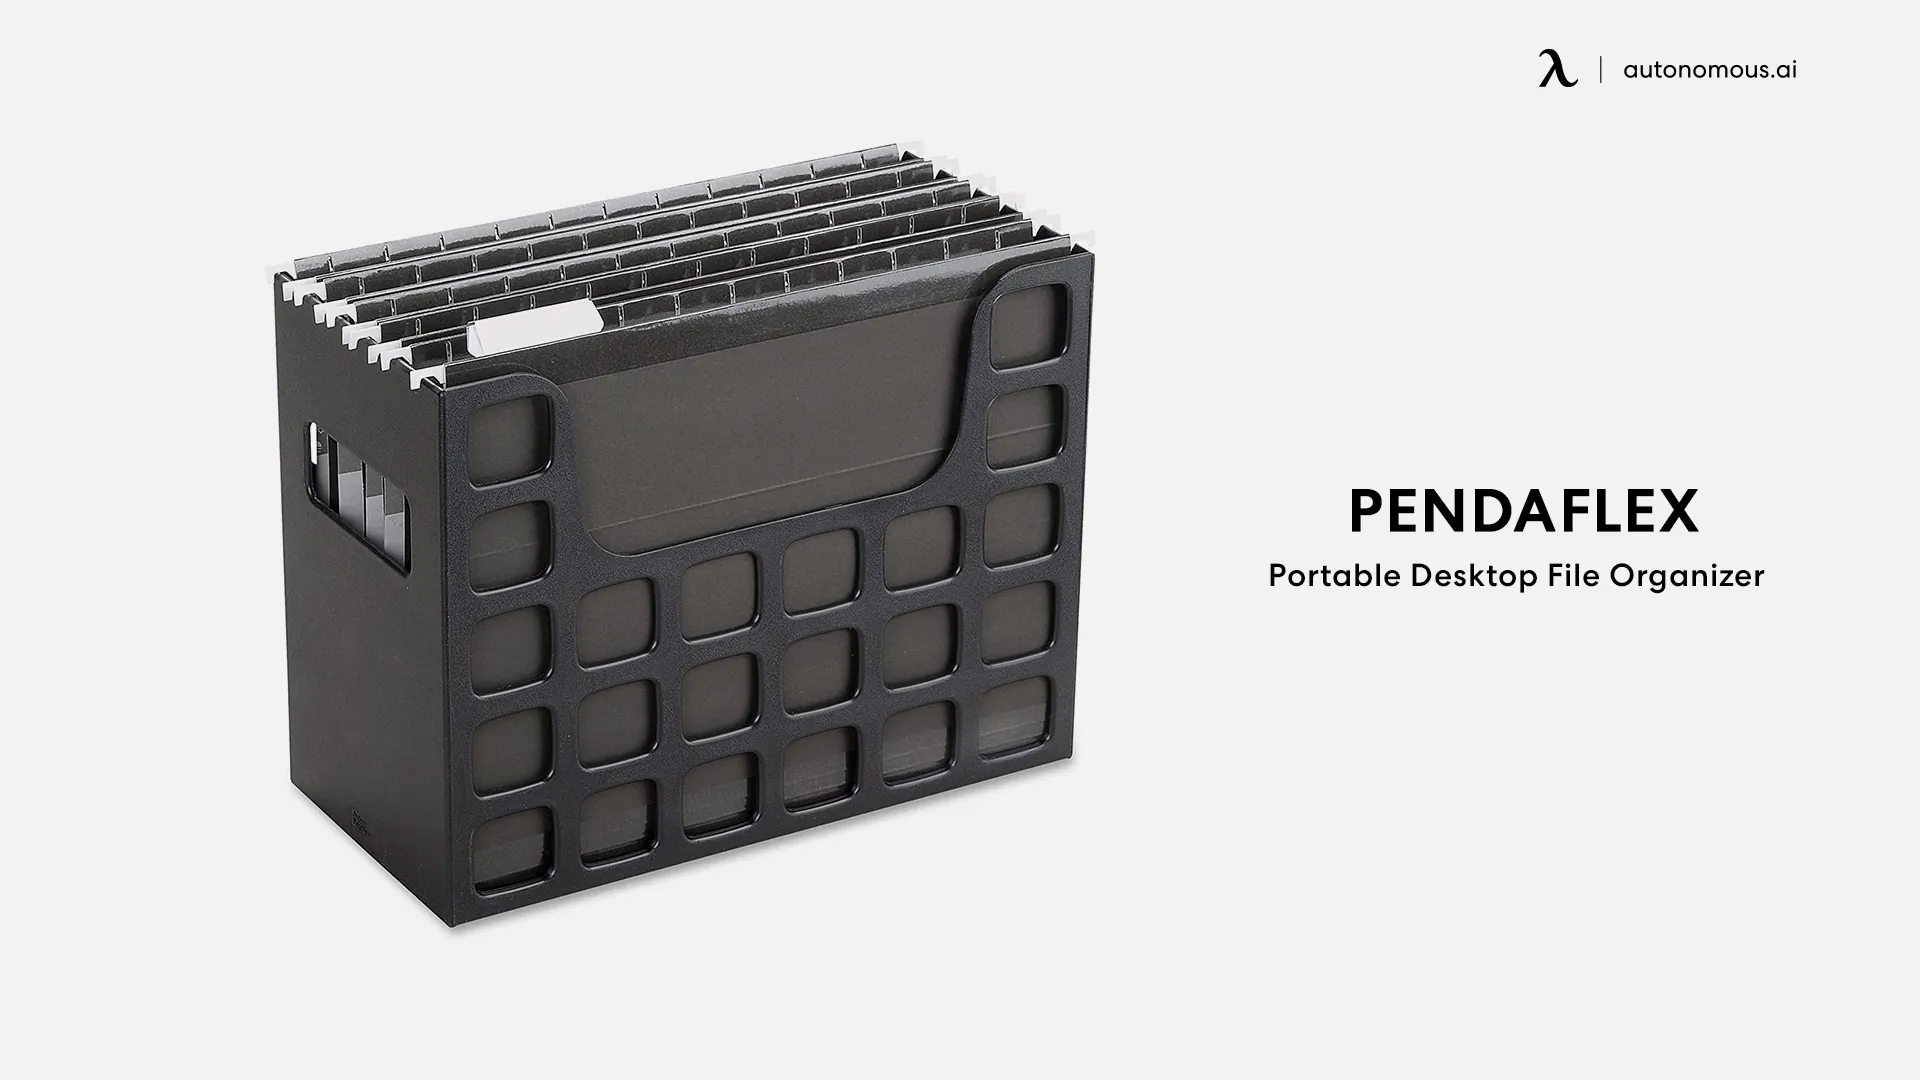 Pendaflex’s Portable Desktop File Organizer